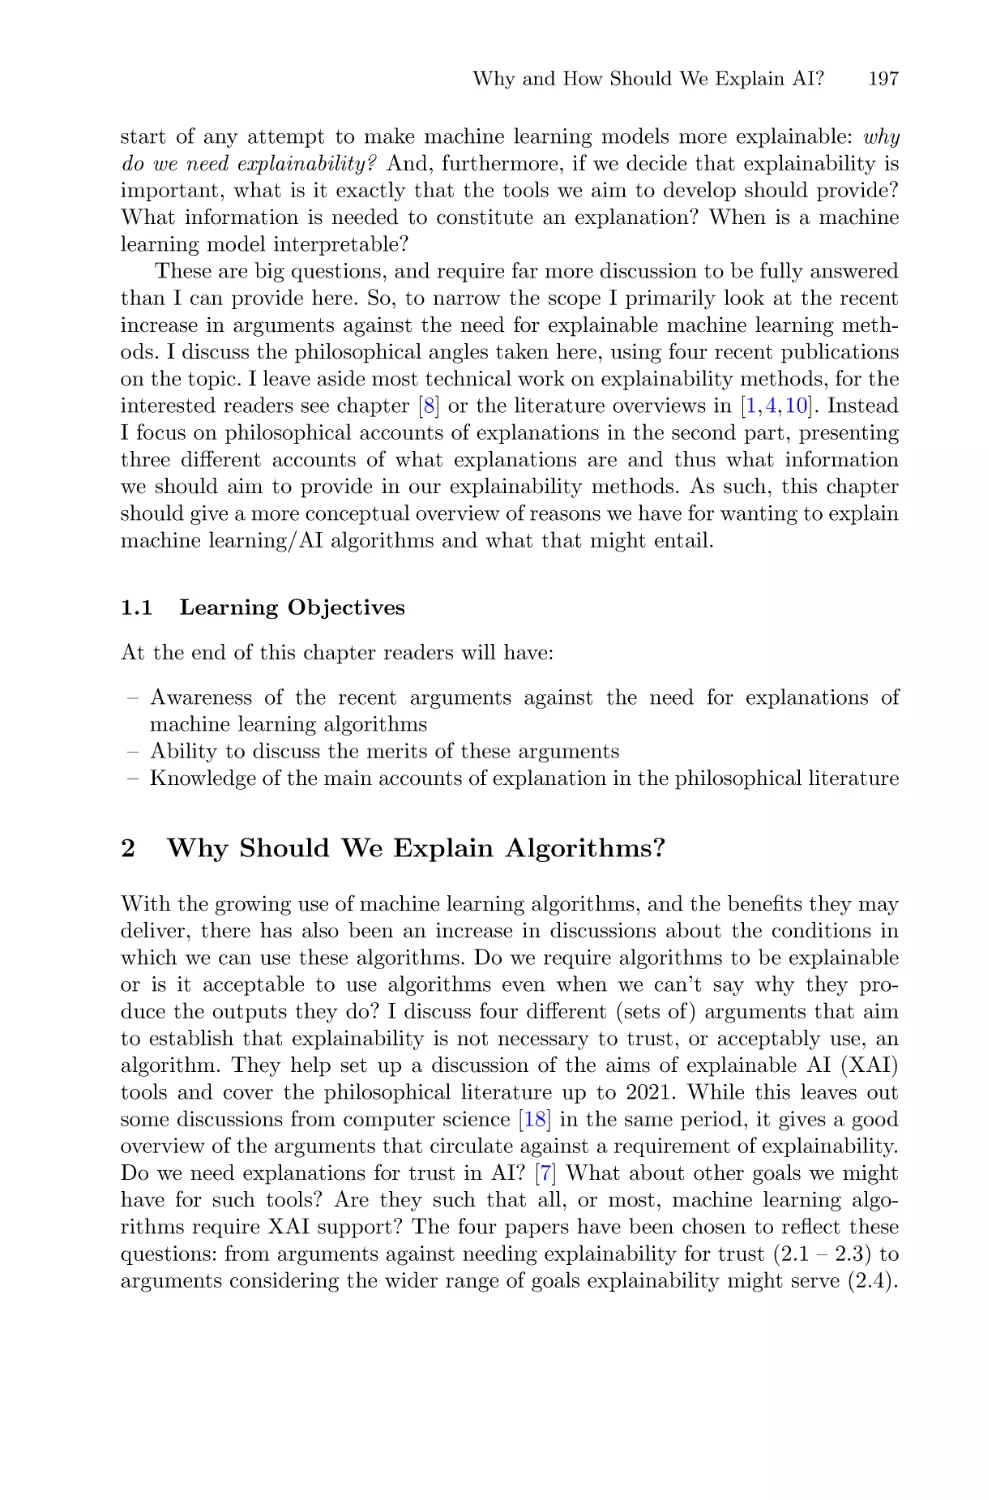 1.1 Learning Objectives
2 Why Should We Explain Algorithms?